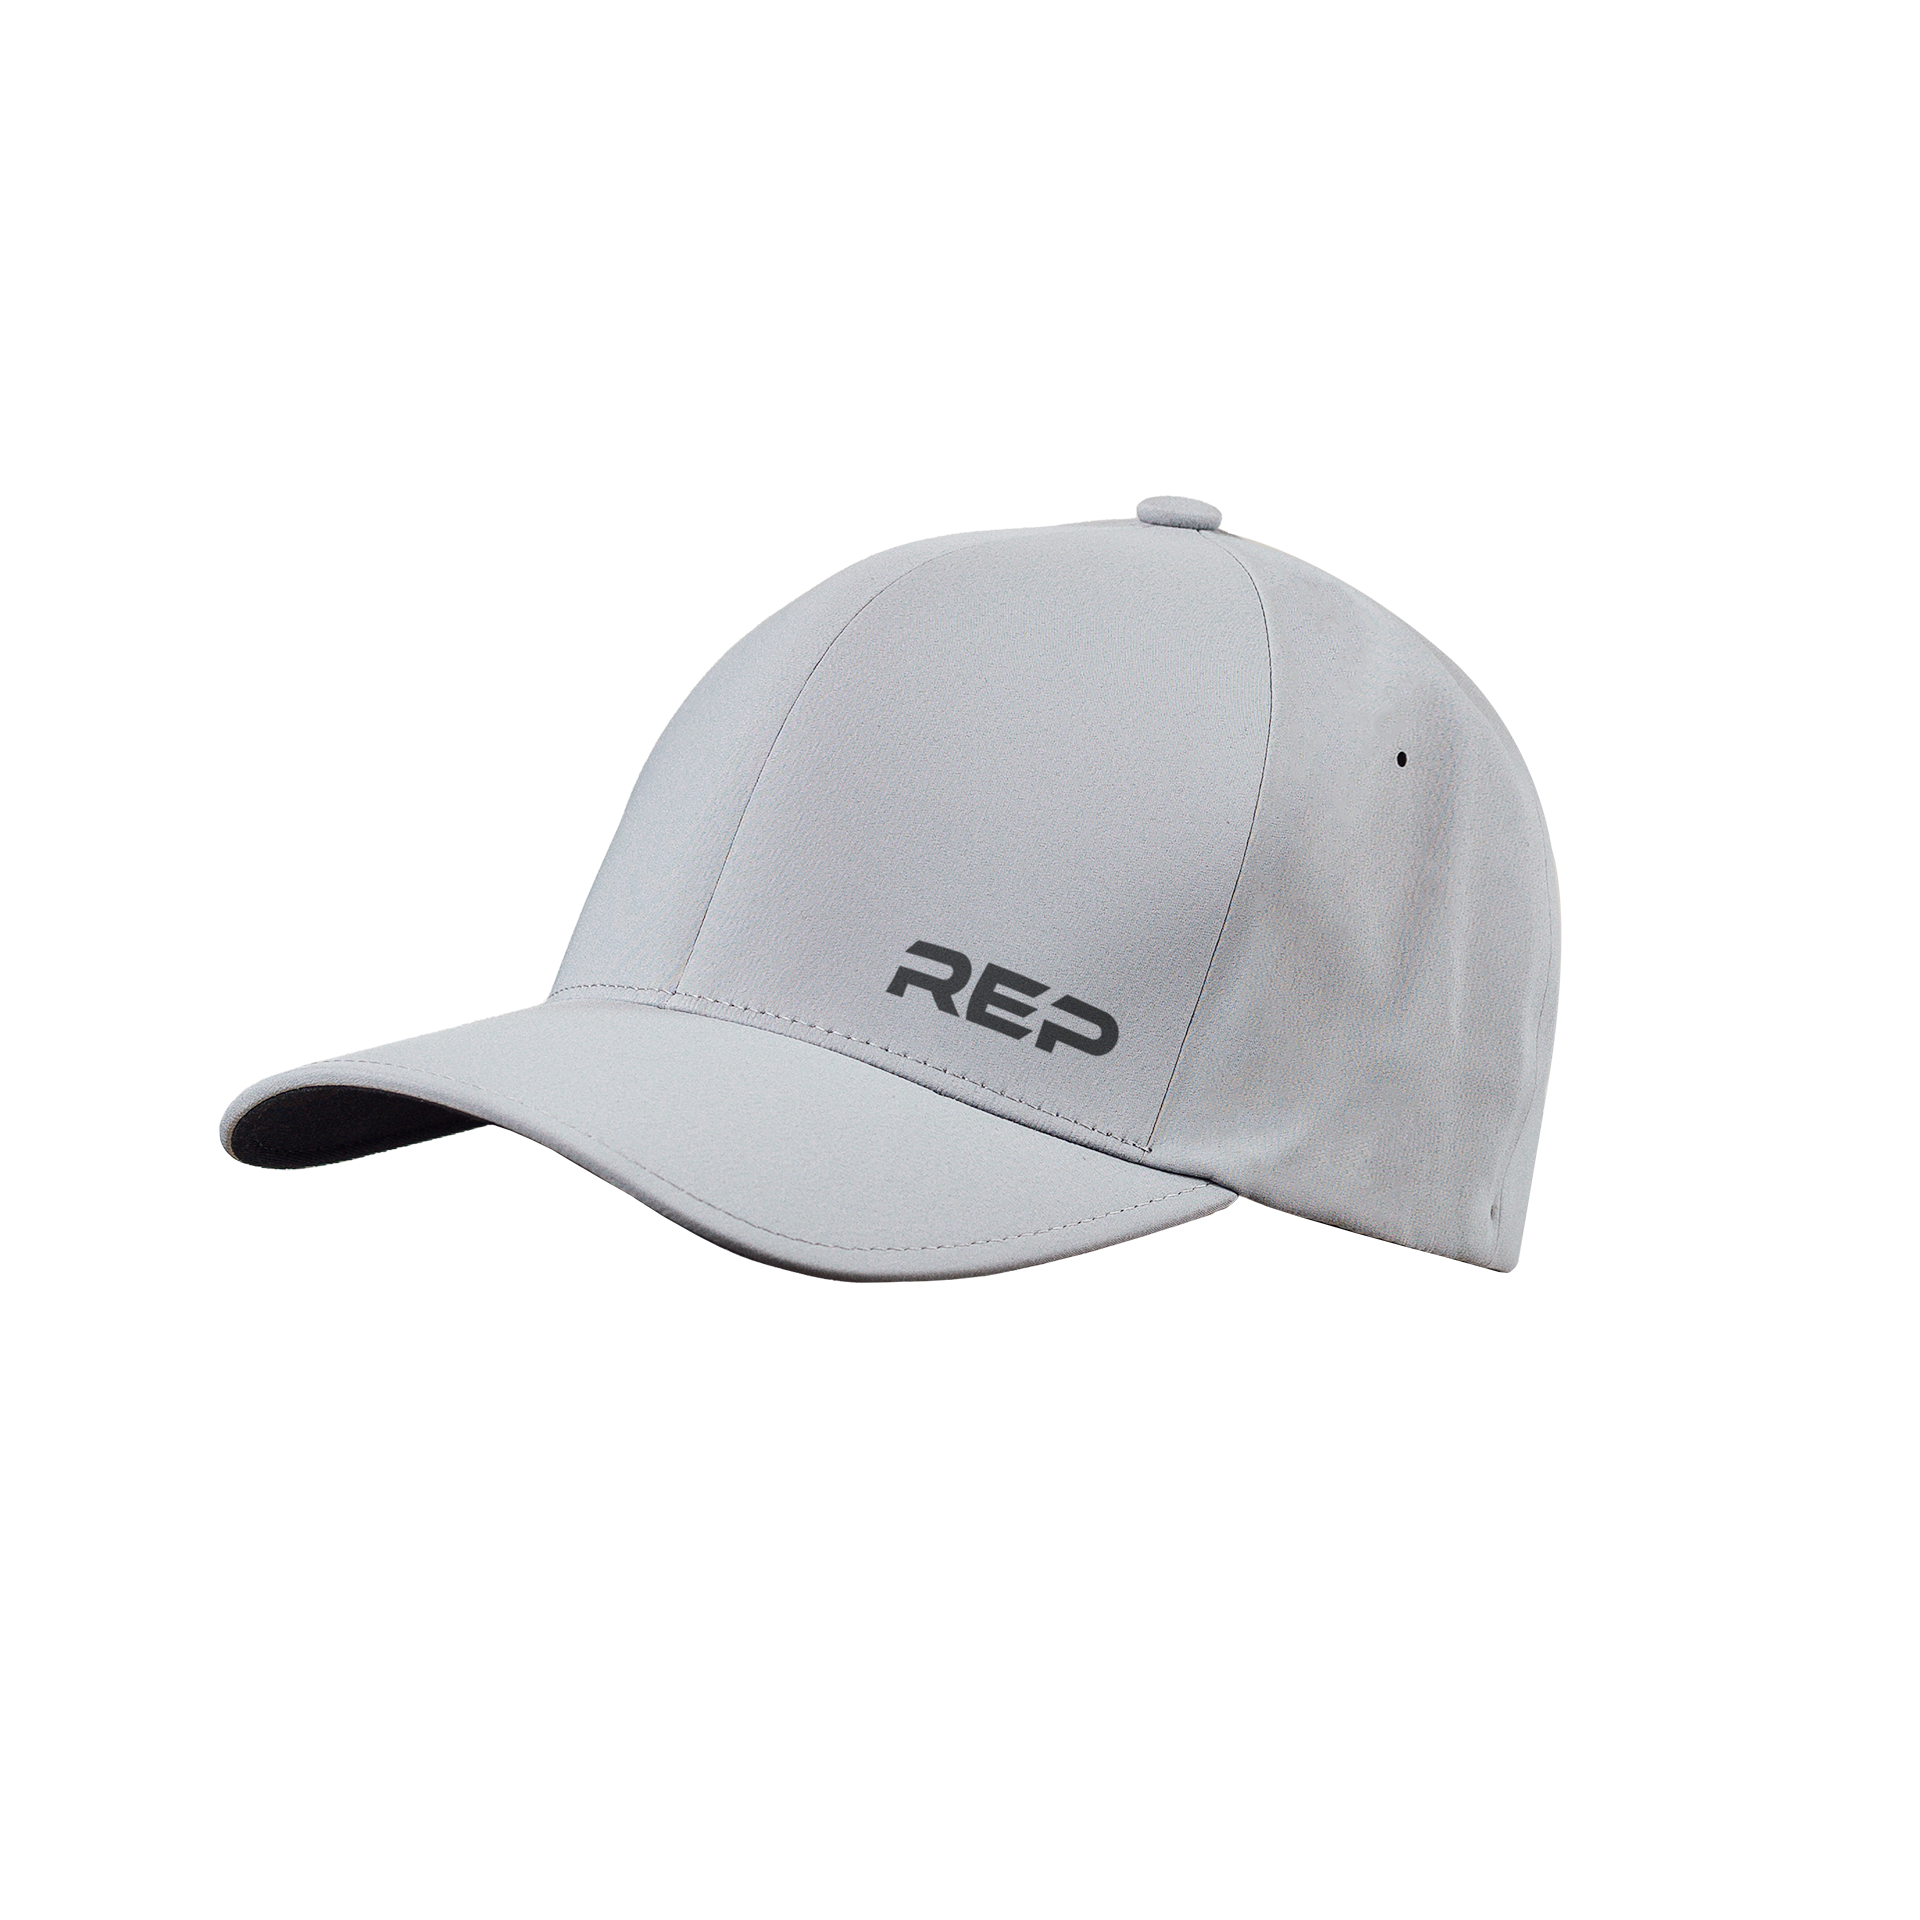 REP Performance Cap - Silver/Black / S/M (6 3/4